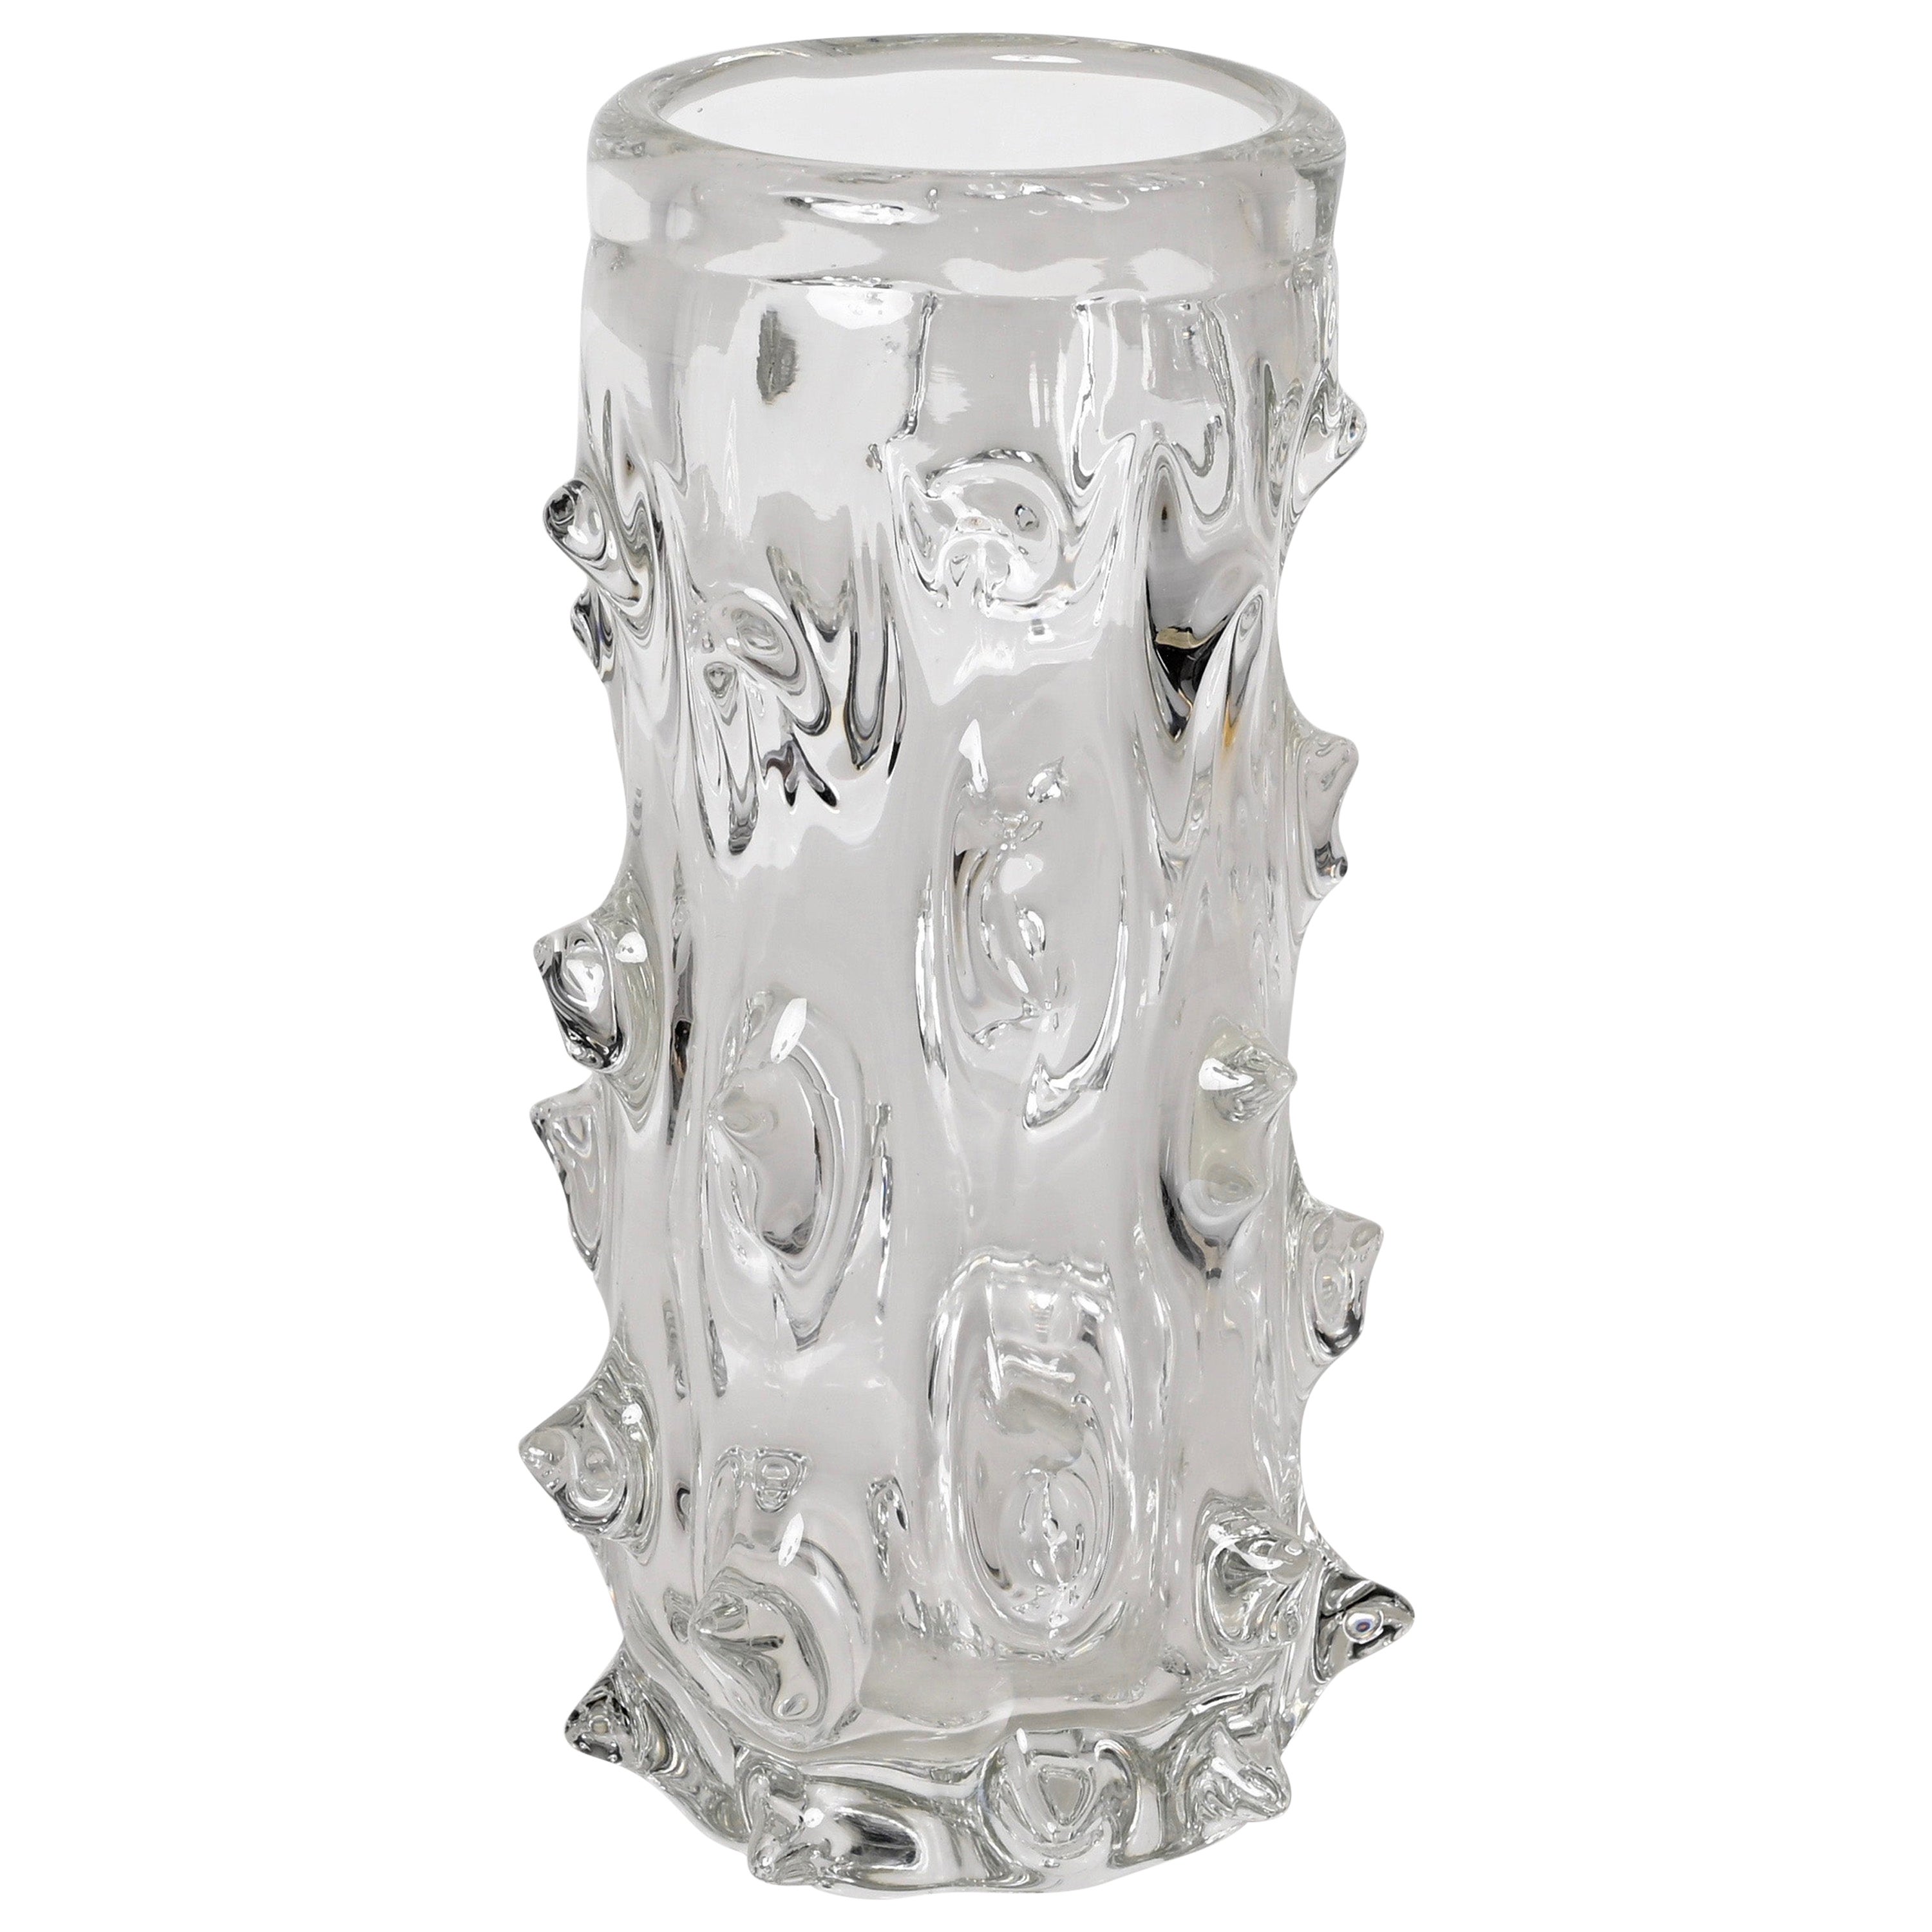 Murano "Mugnoni" Glass Decorative Vase or Flowerpot, by Barovier, Italy 1940s For Sale